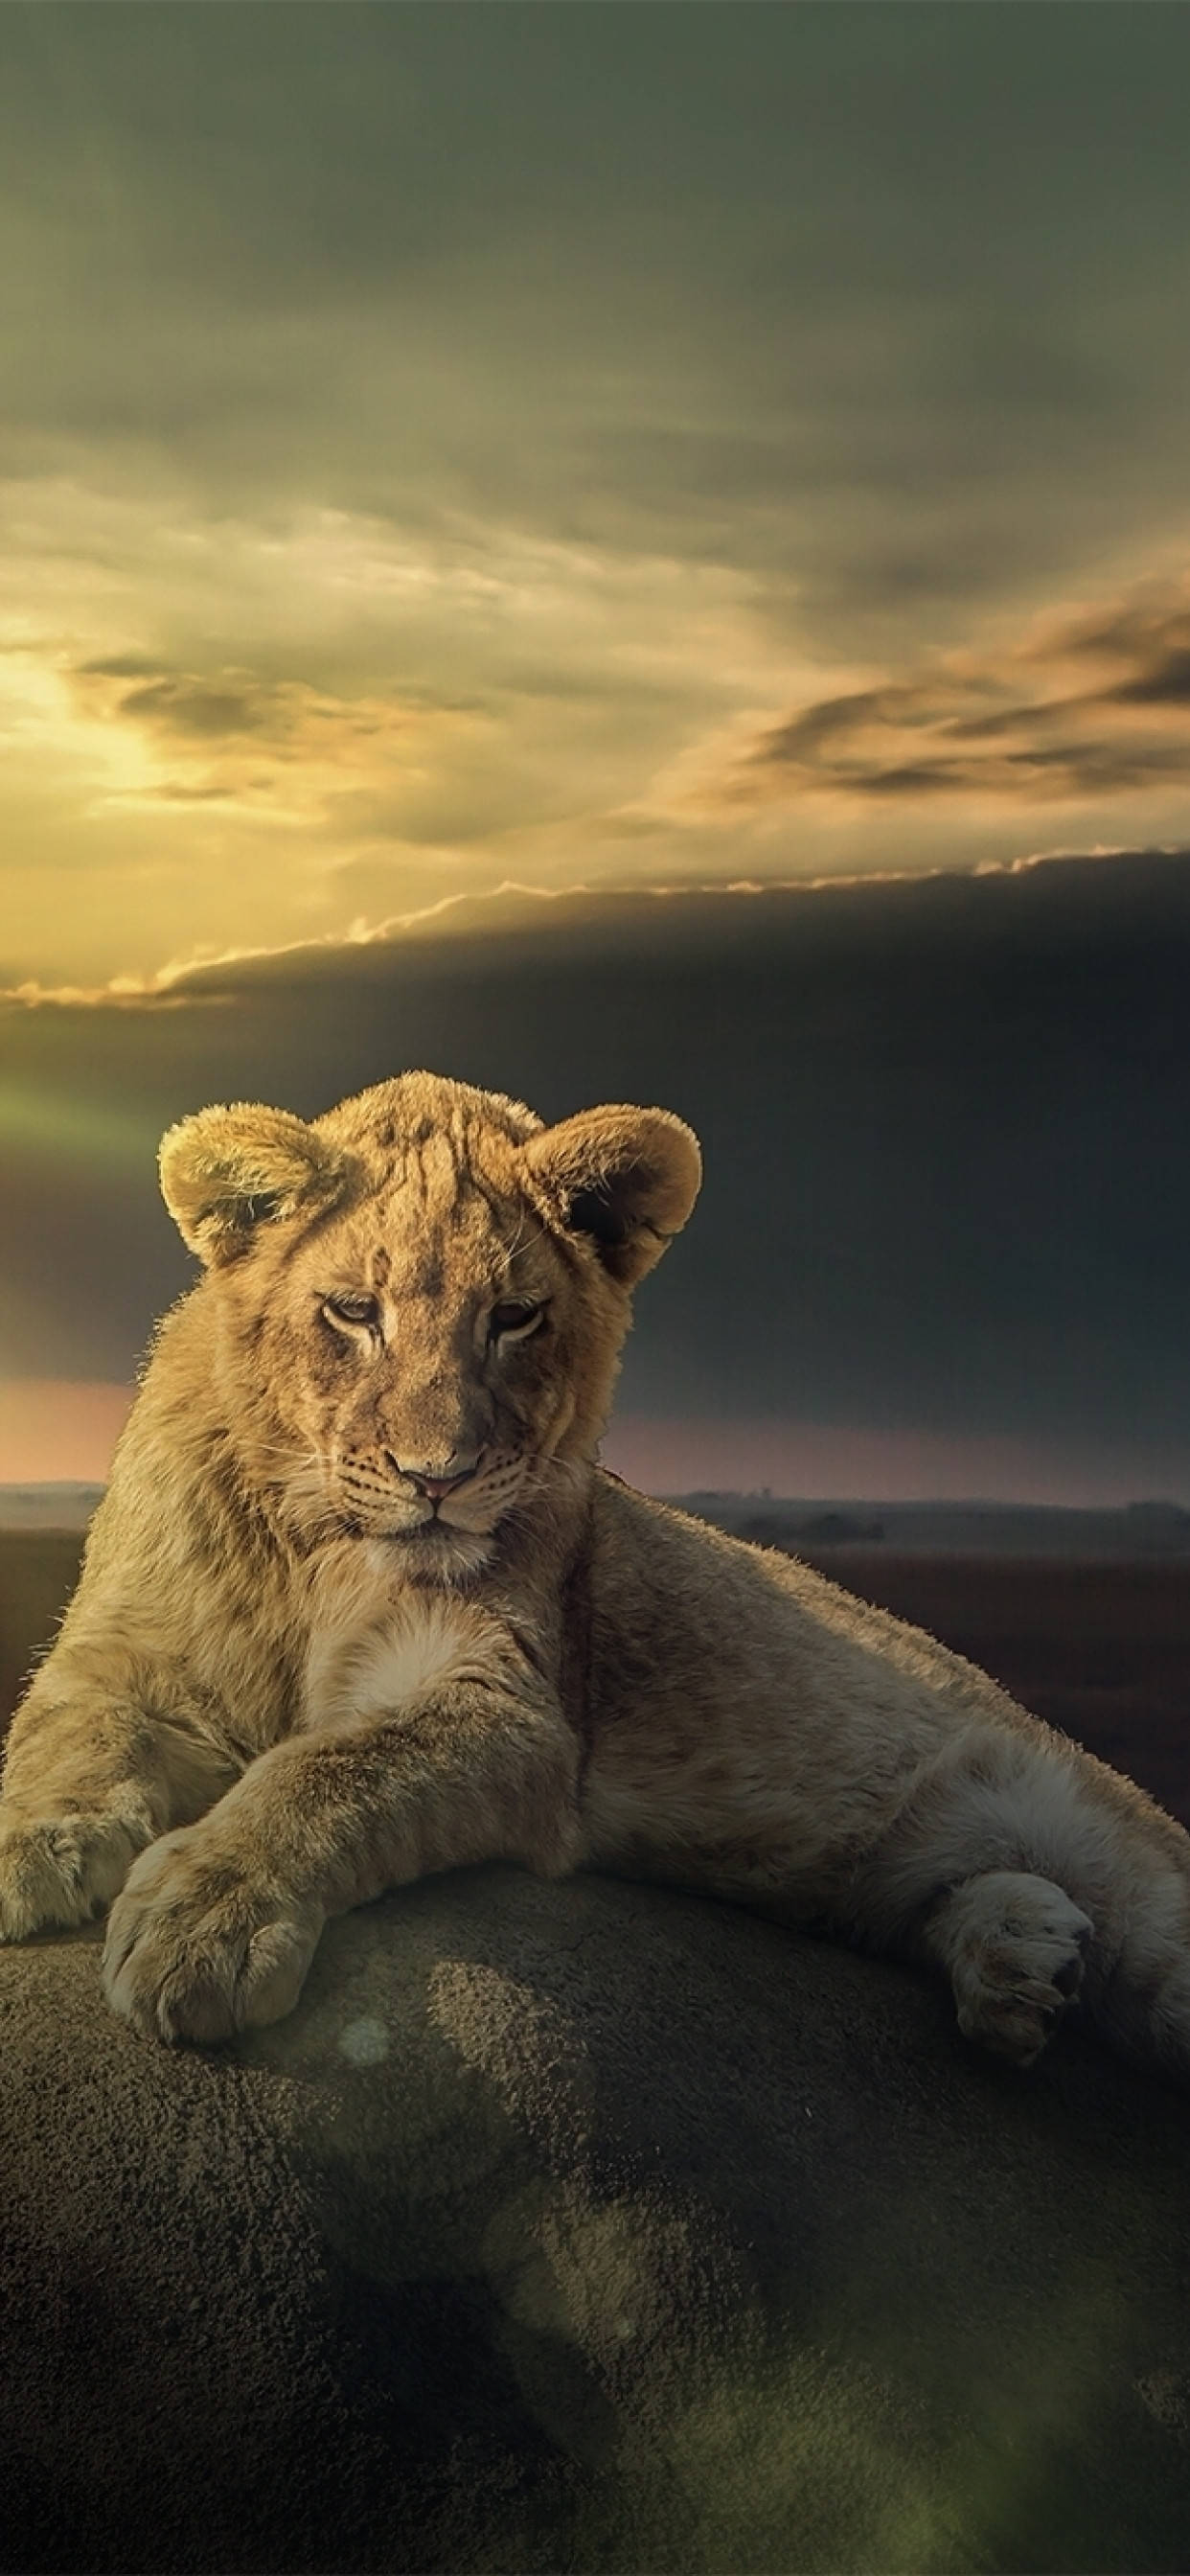 Desert Sand Maneless Lion Iphone Background